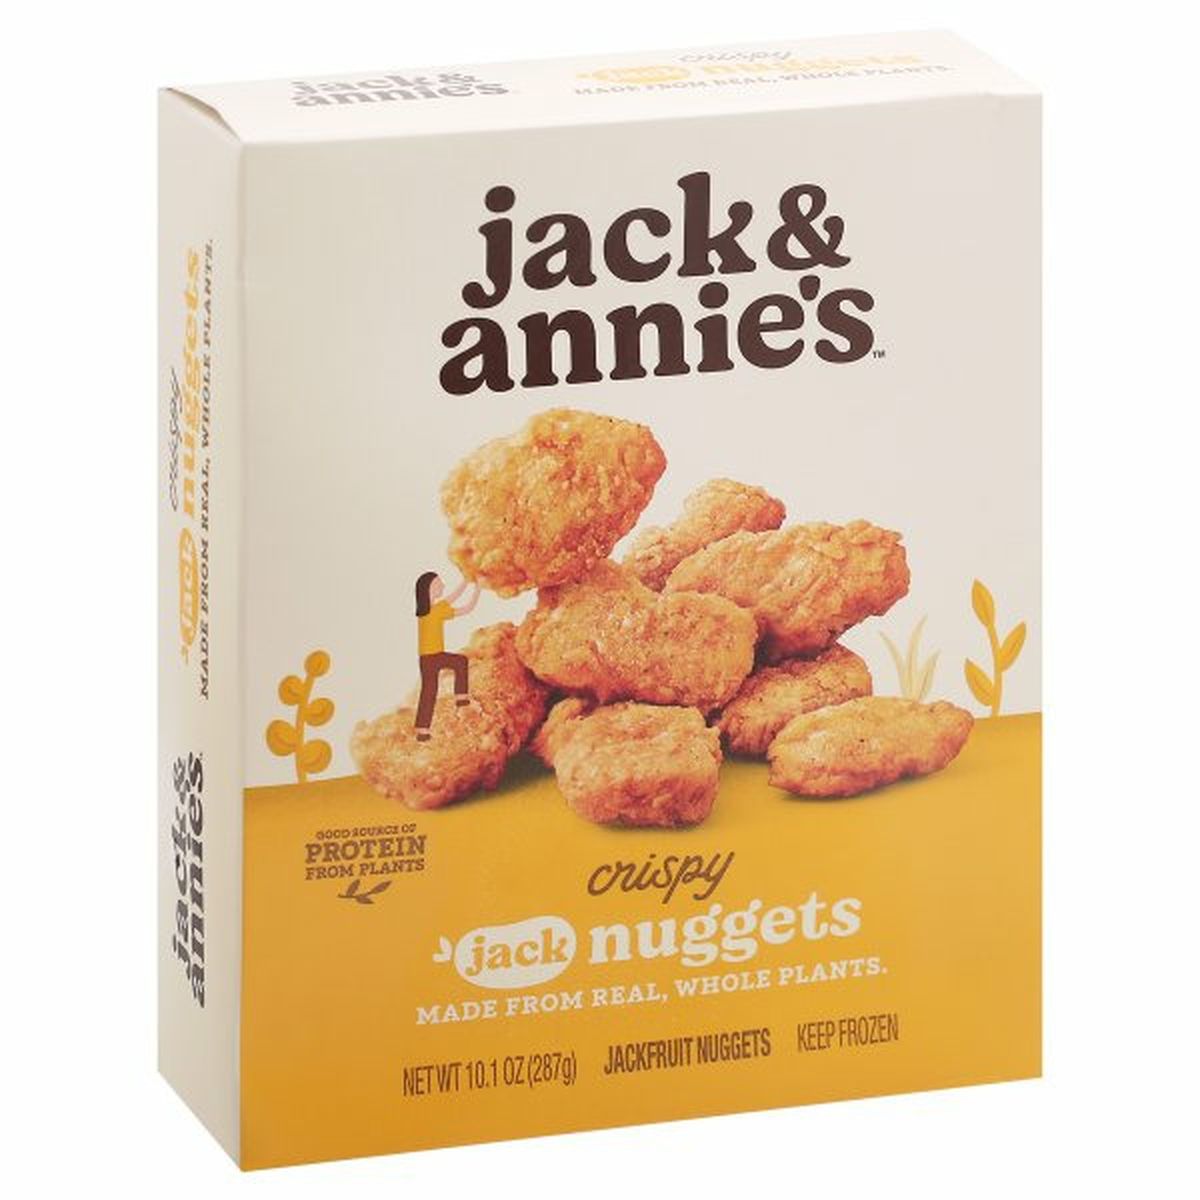 Calories in Jack & Annie's Jackfruit Nuggets, Crispy